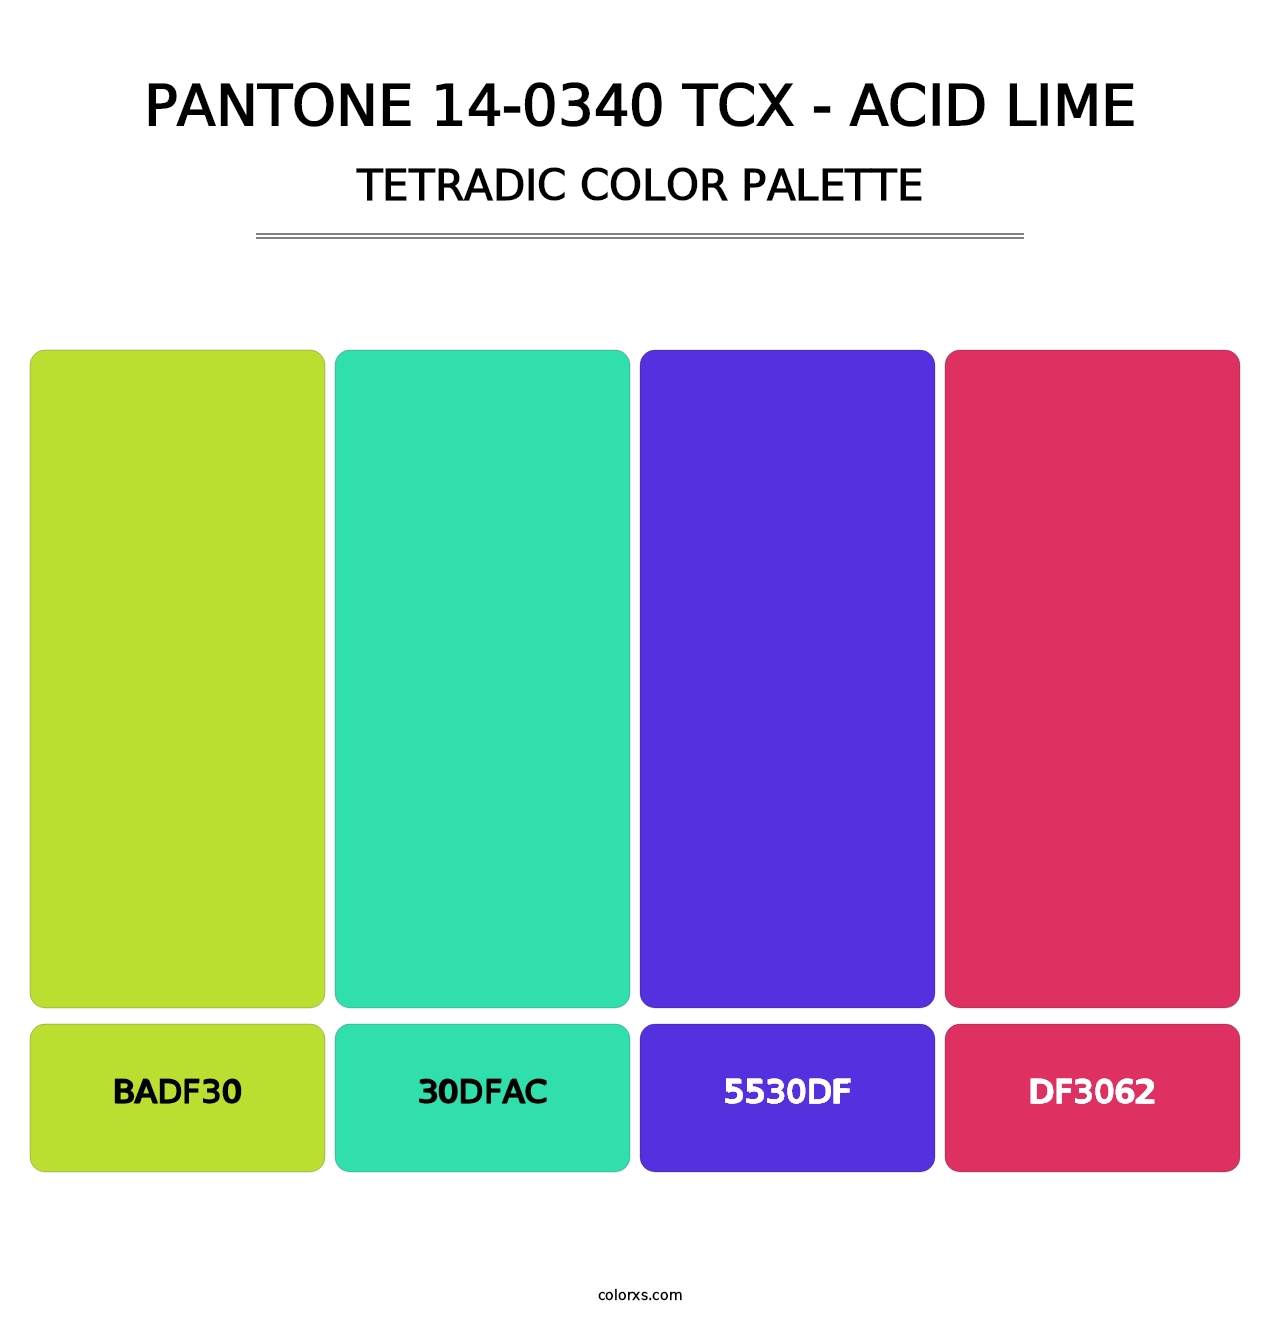 PANTONE 14-0340 TCX - Acid Lime - Tetradic Color Palette